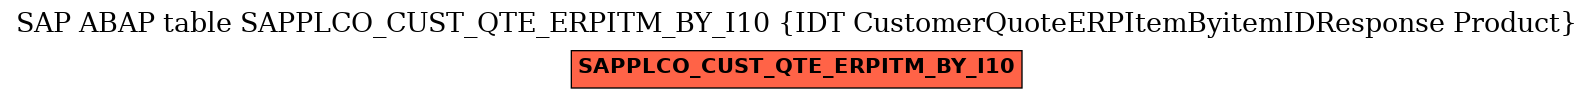 E-R Diagram for table SAPPLCO_CUST_QTE_ERPITM_BY_I10 (IDT CustomerQuoteERPItemByitemIDResponse Product)